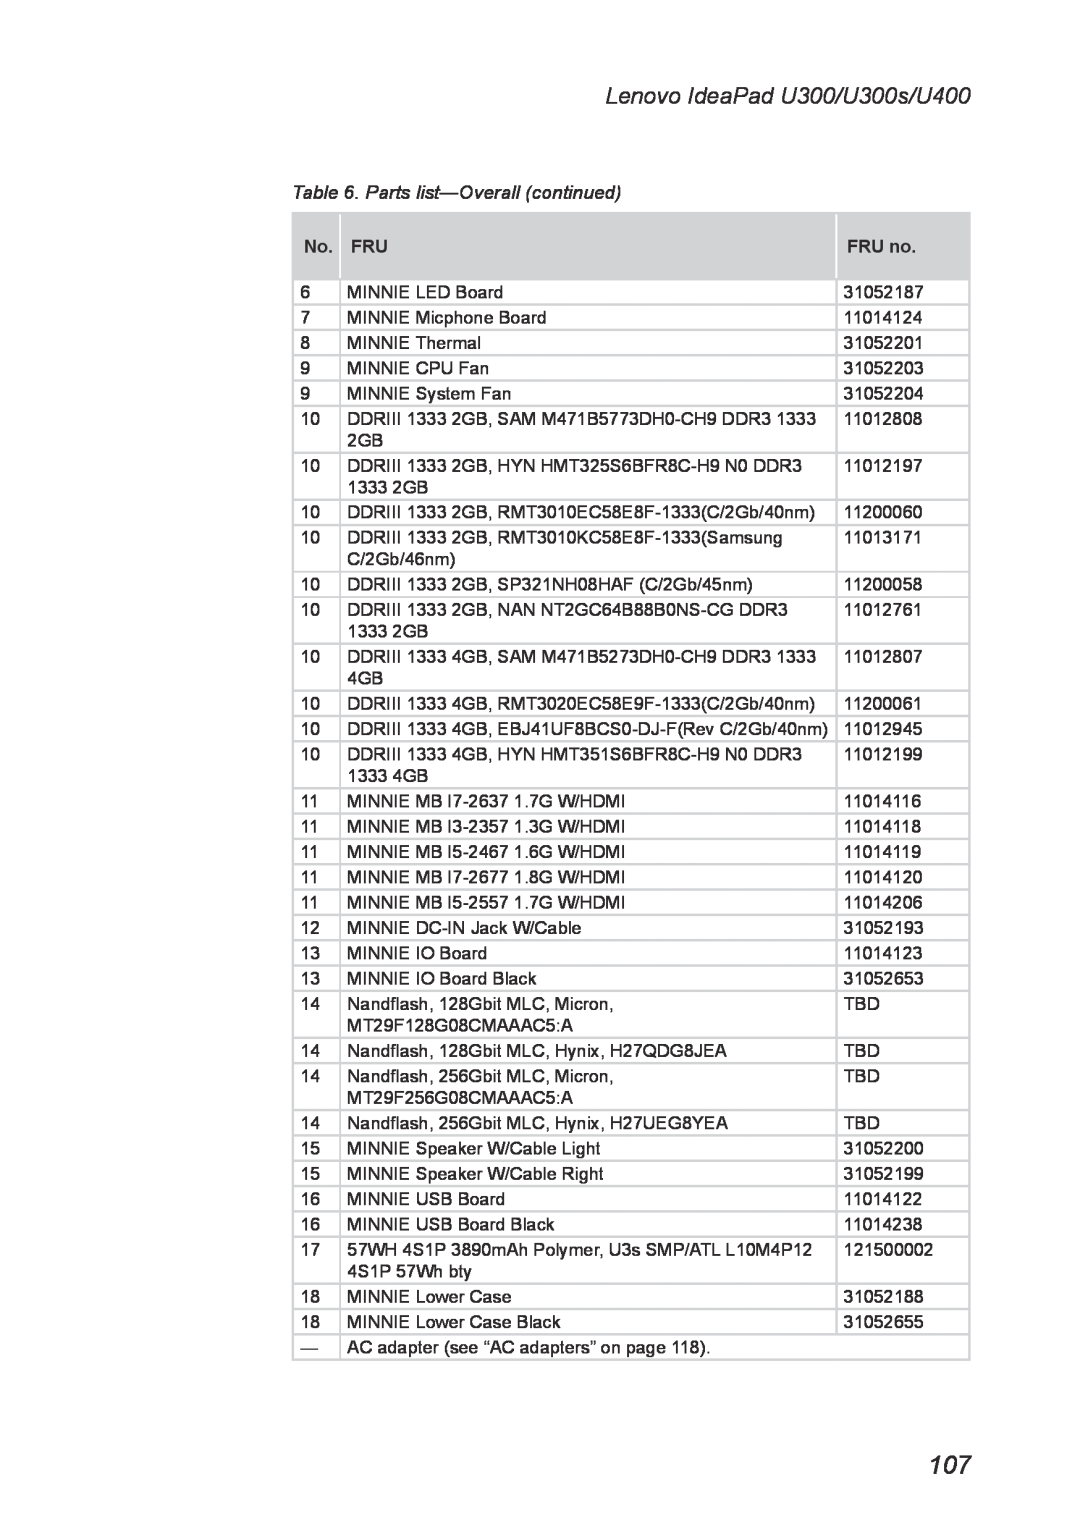 Lenovo U300S manual Parts list-Overall continued, Lenovo IdeaPad U300/U300s/U400, No. FRU, FRU no 